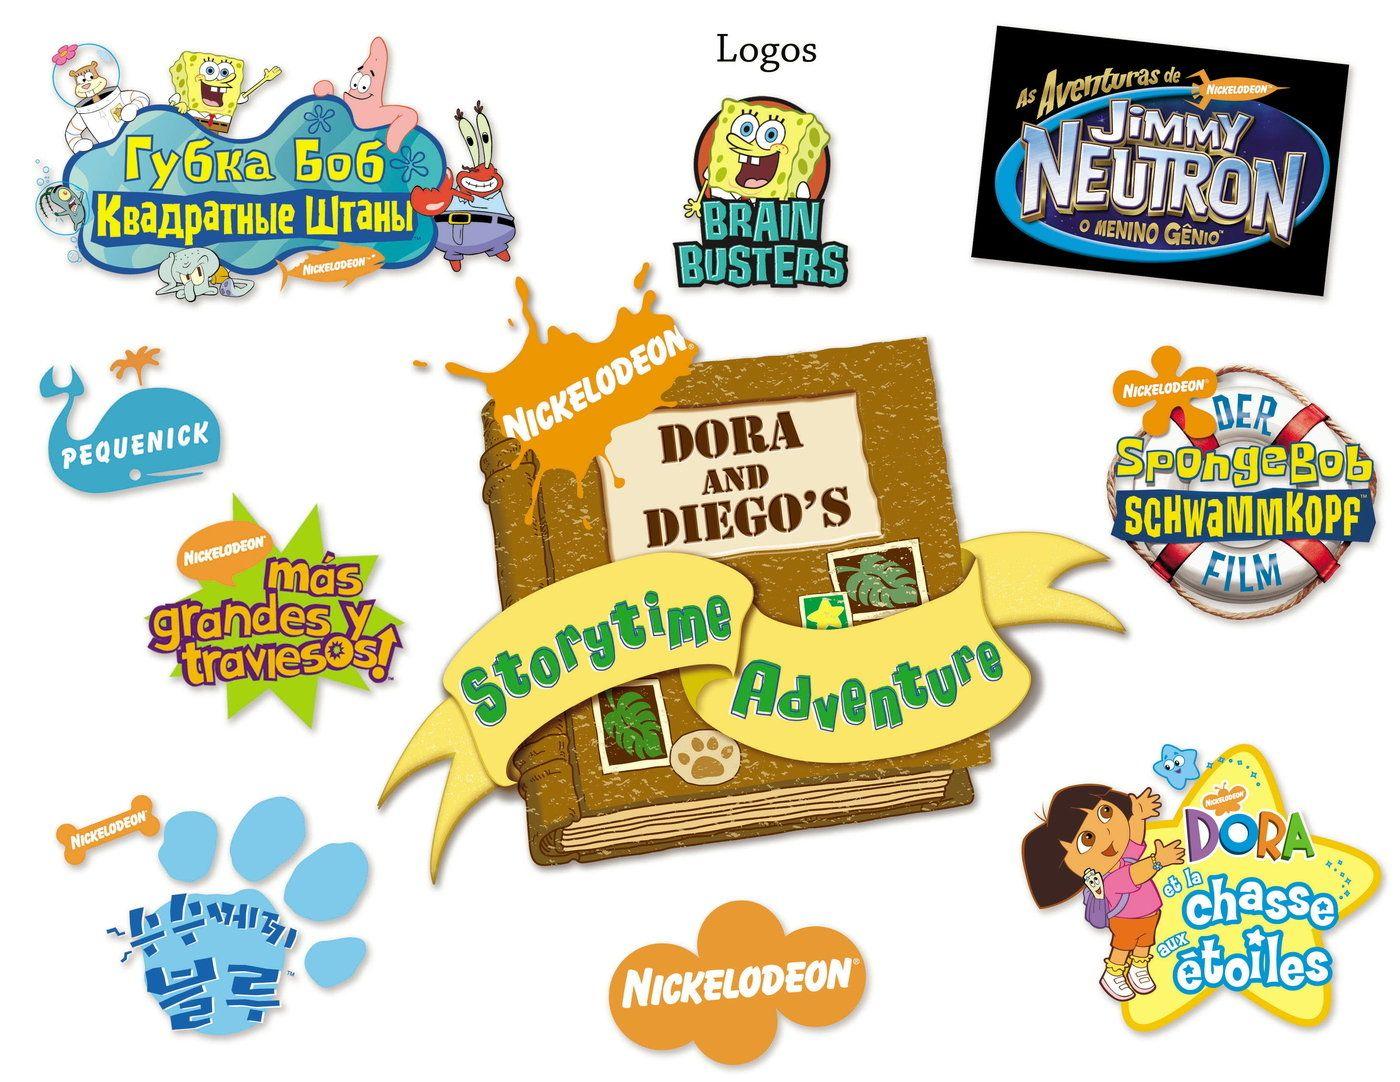 Old Spongebob Logo - Nickelodeon Product Development & Packaging Design by Jennifer ...